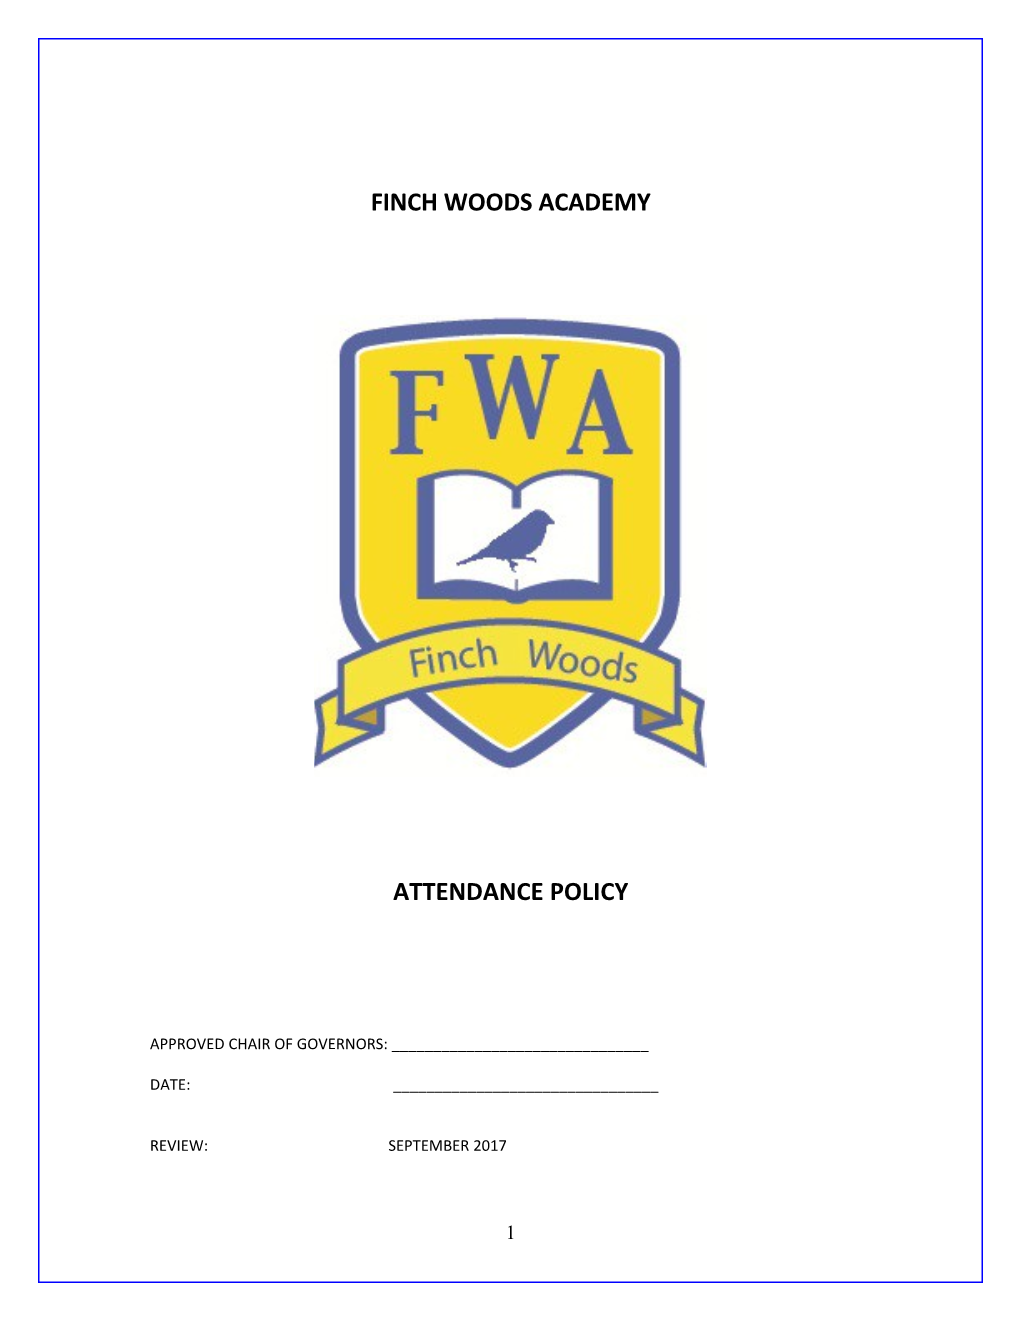 Finch Woods Academy